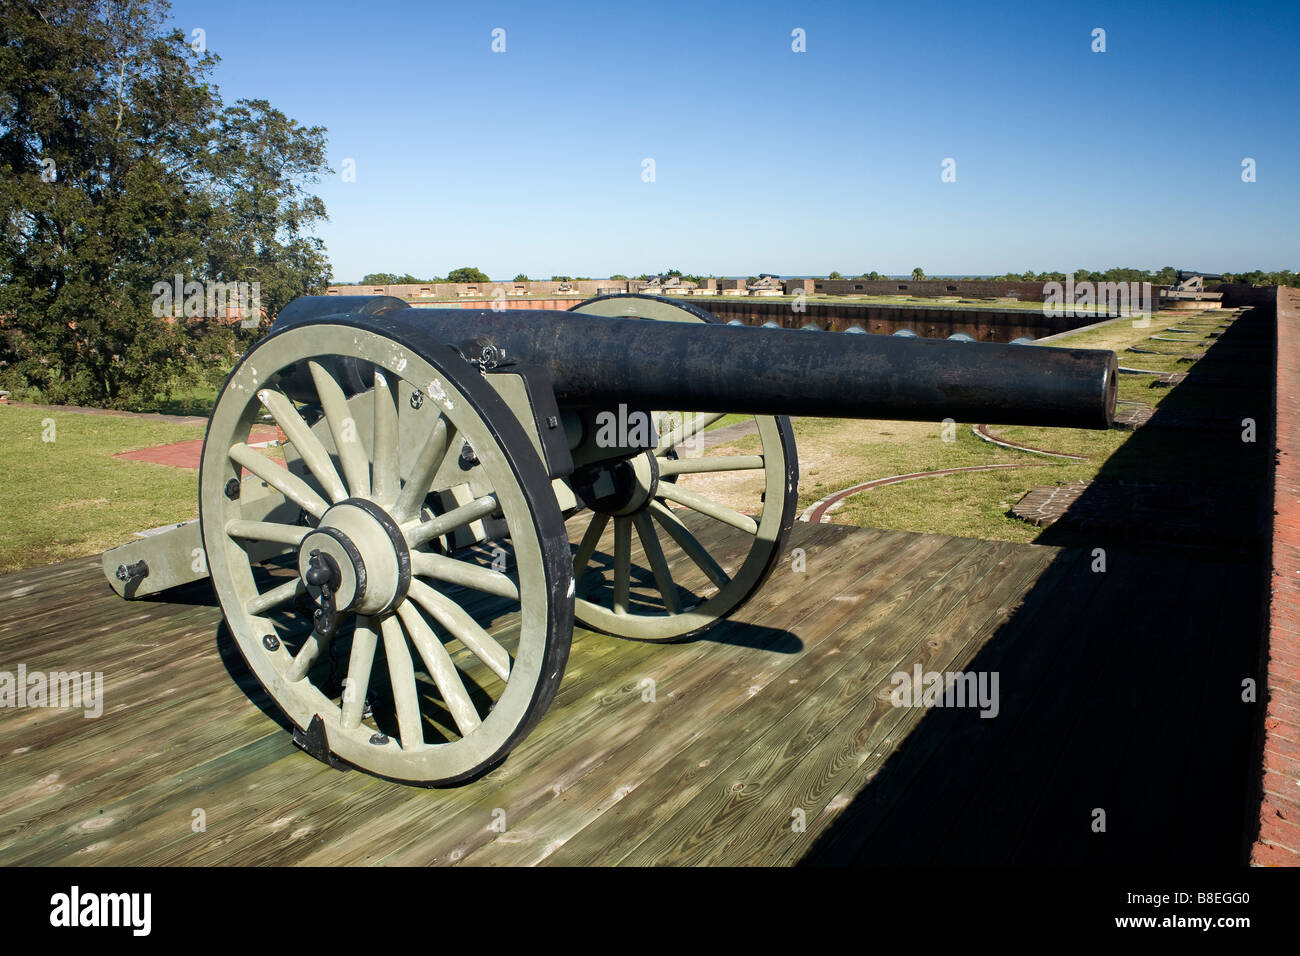 GEORGIA - Canon at Fort Pulaski National Monument, a Civil War era fort built on Cockspur Island to protect Savannah. Stock Photo